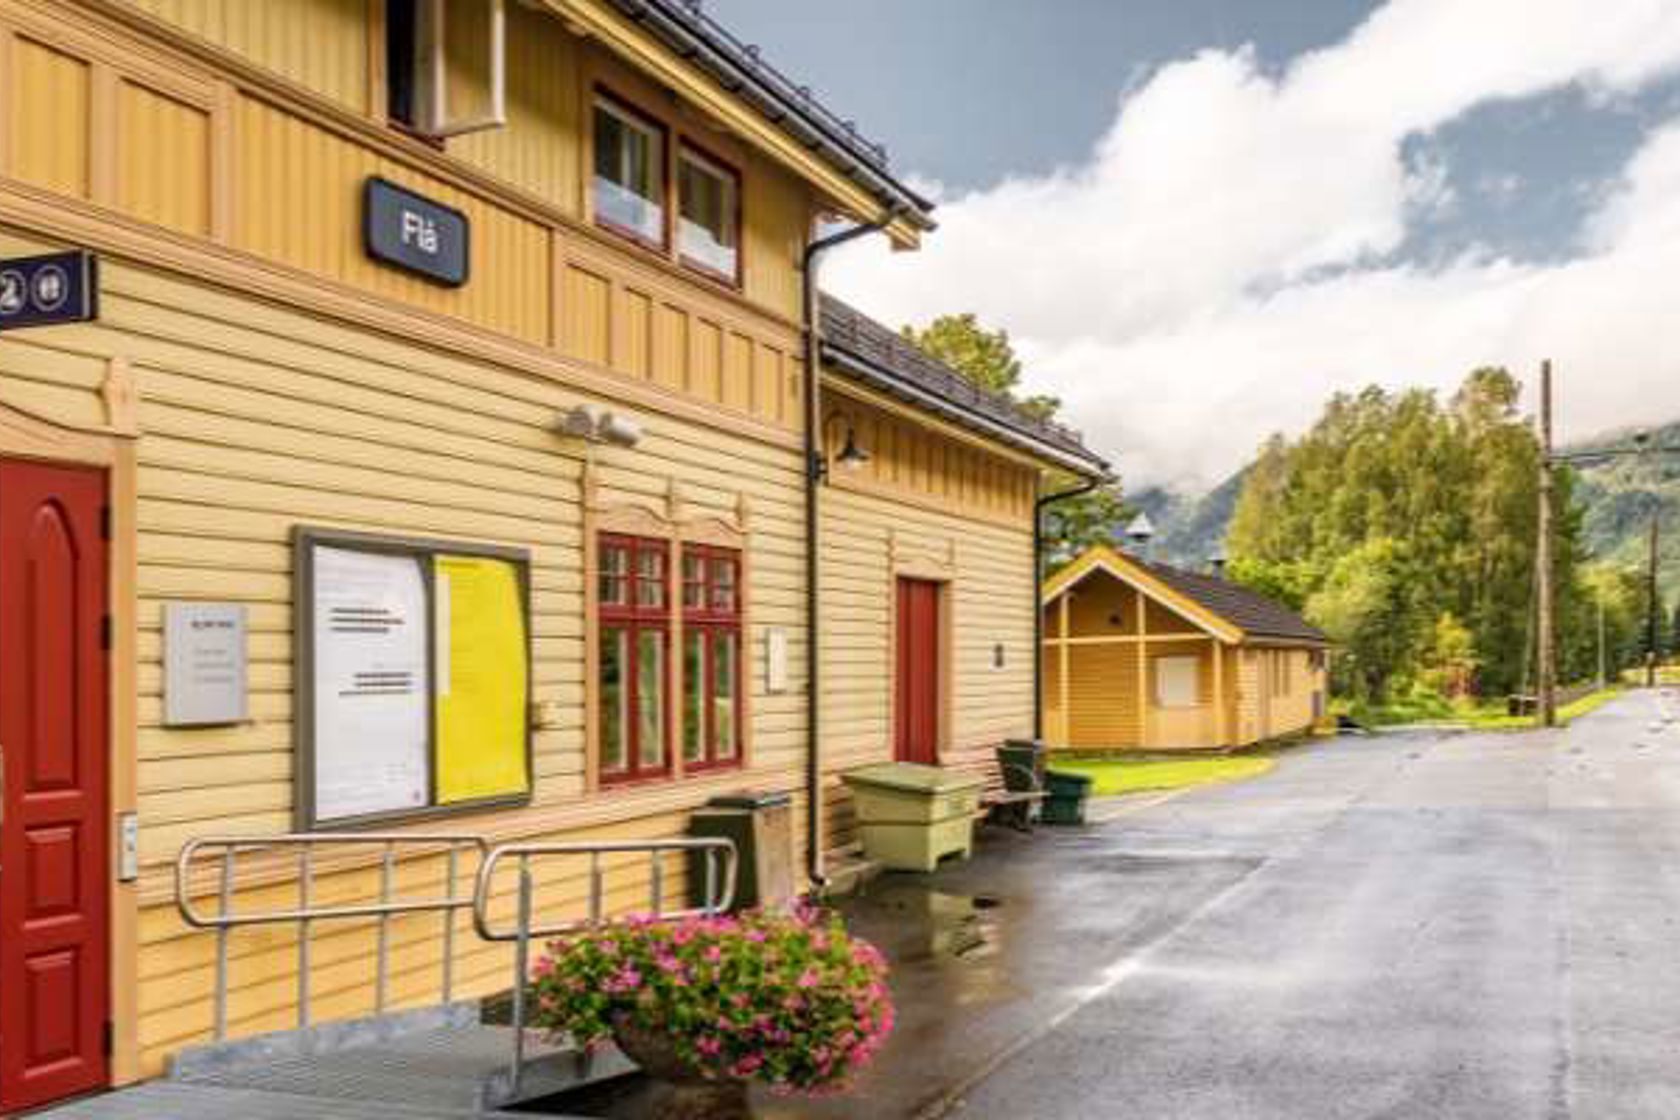 Exterior view of Flå station